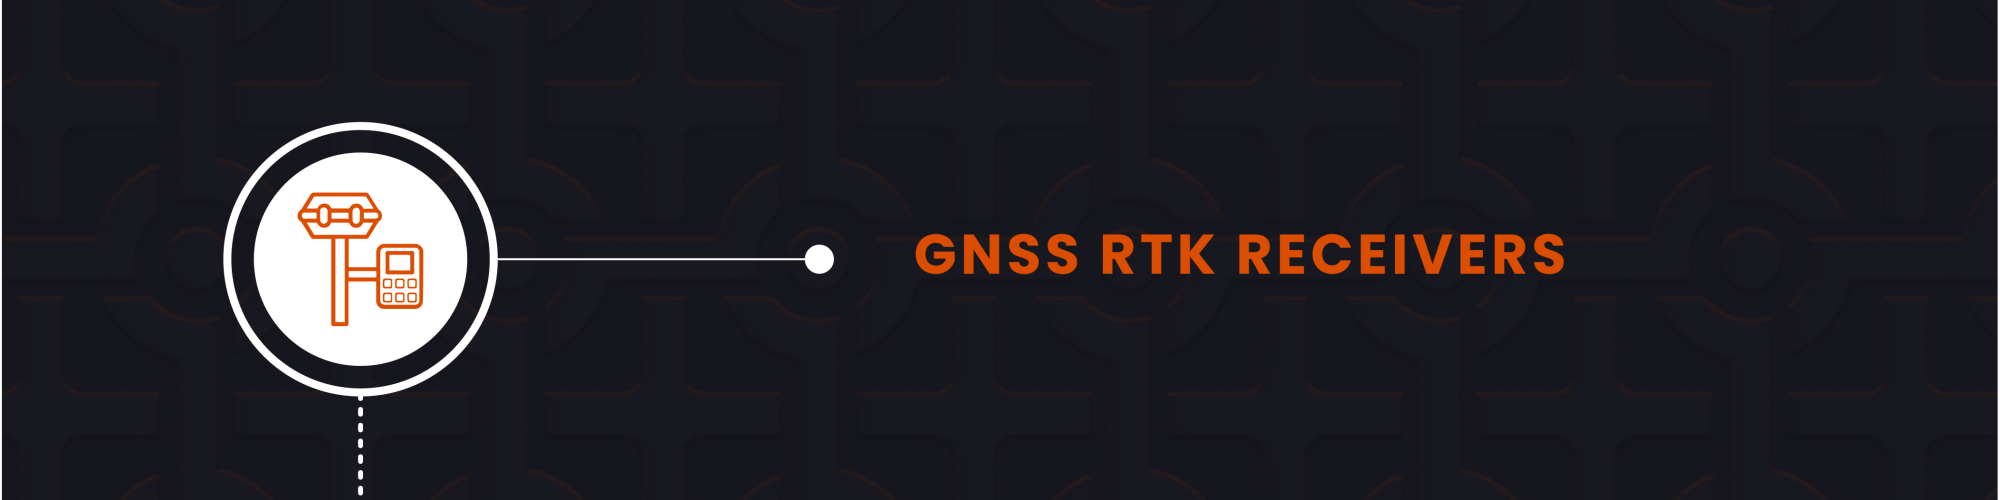 GNSS RTK Receivers